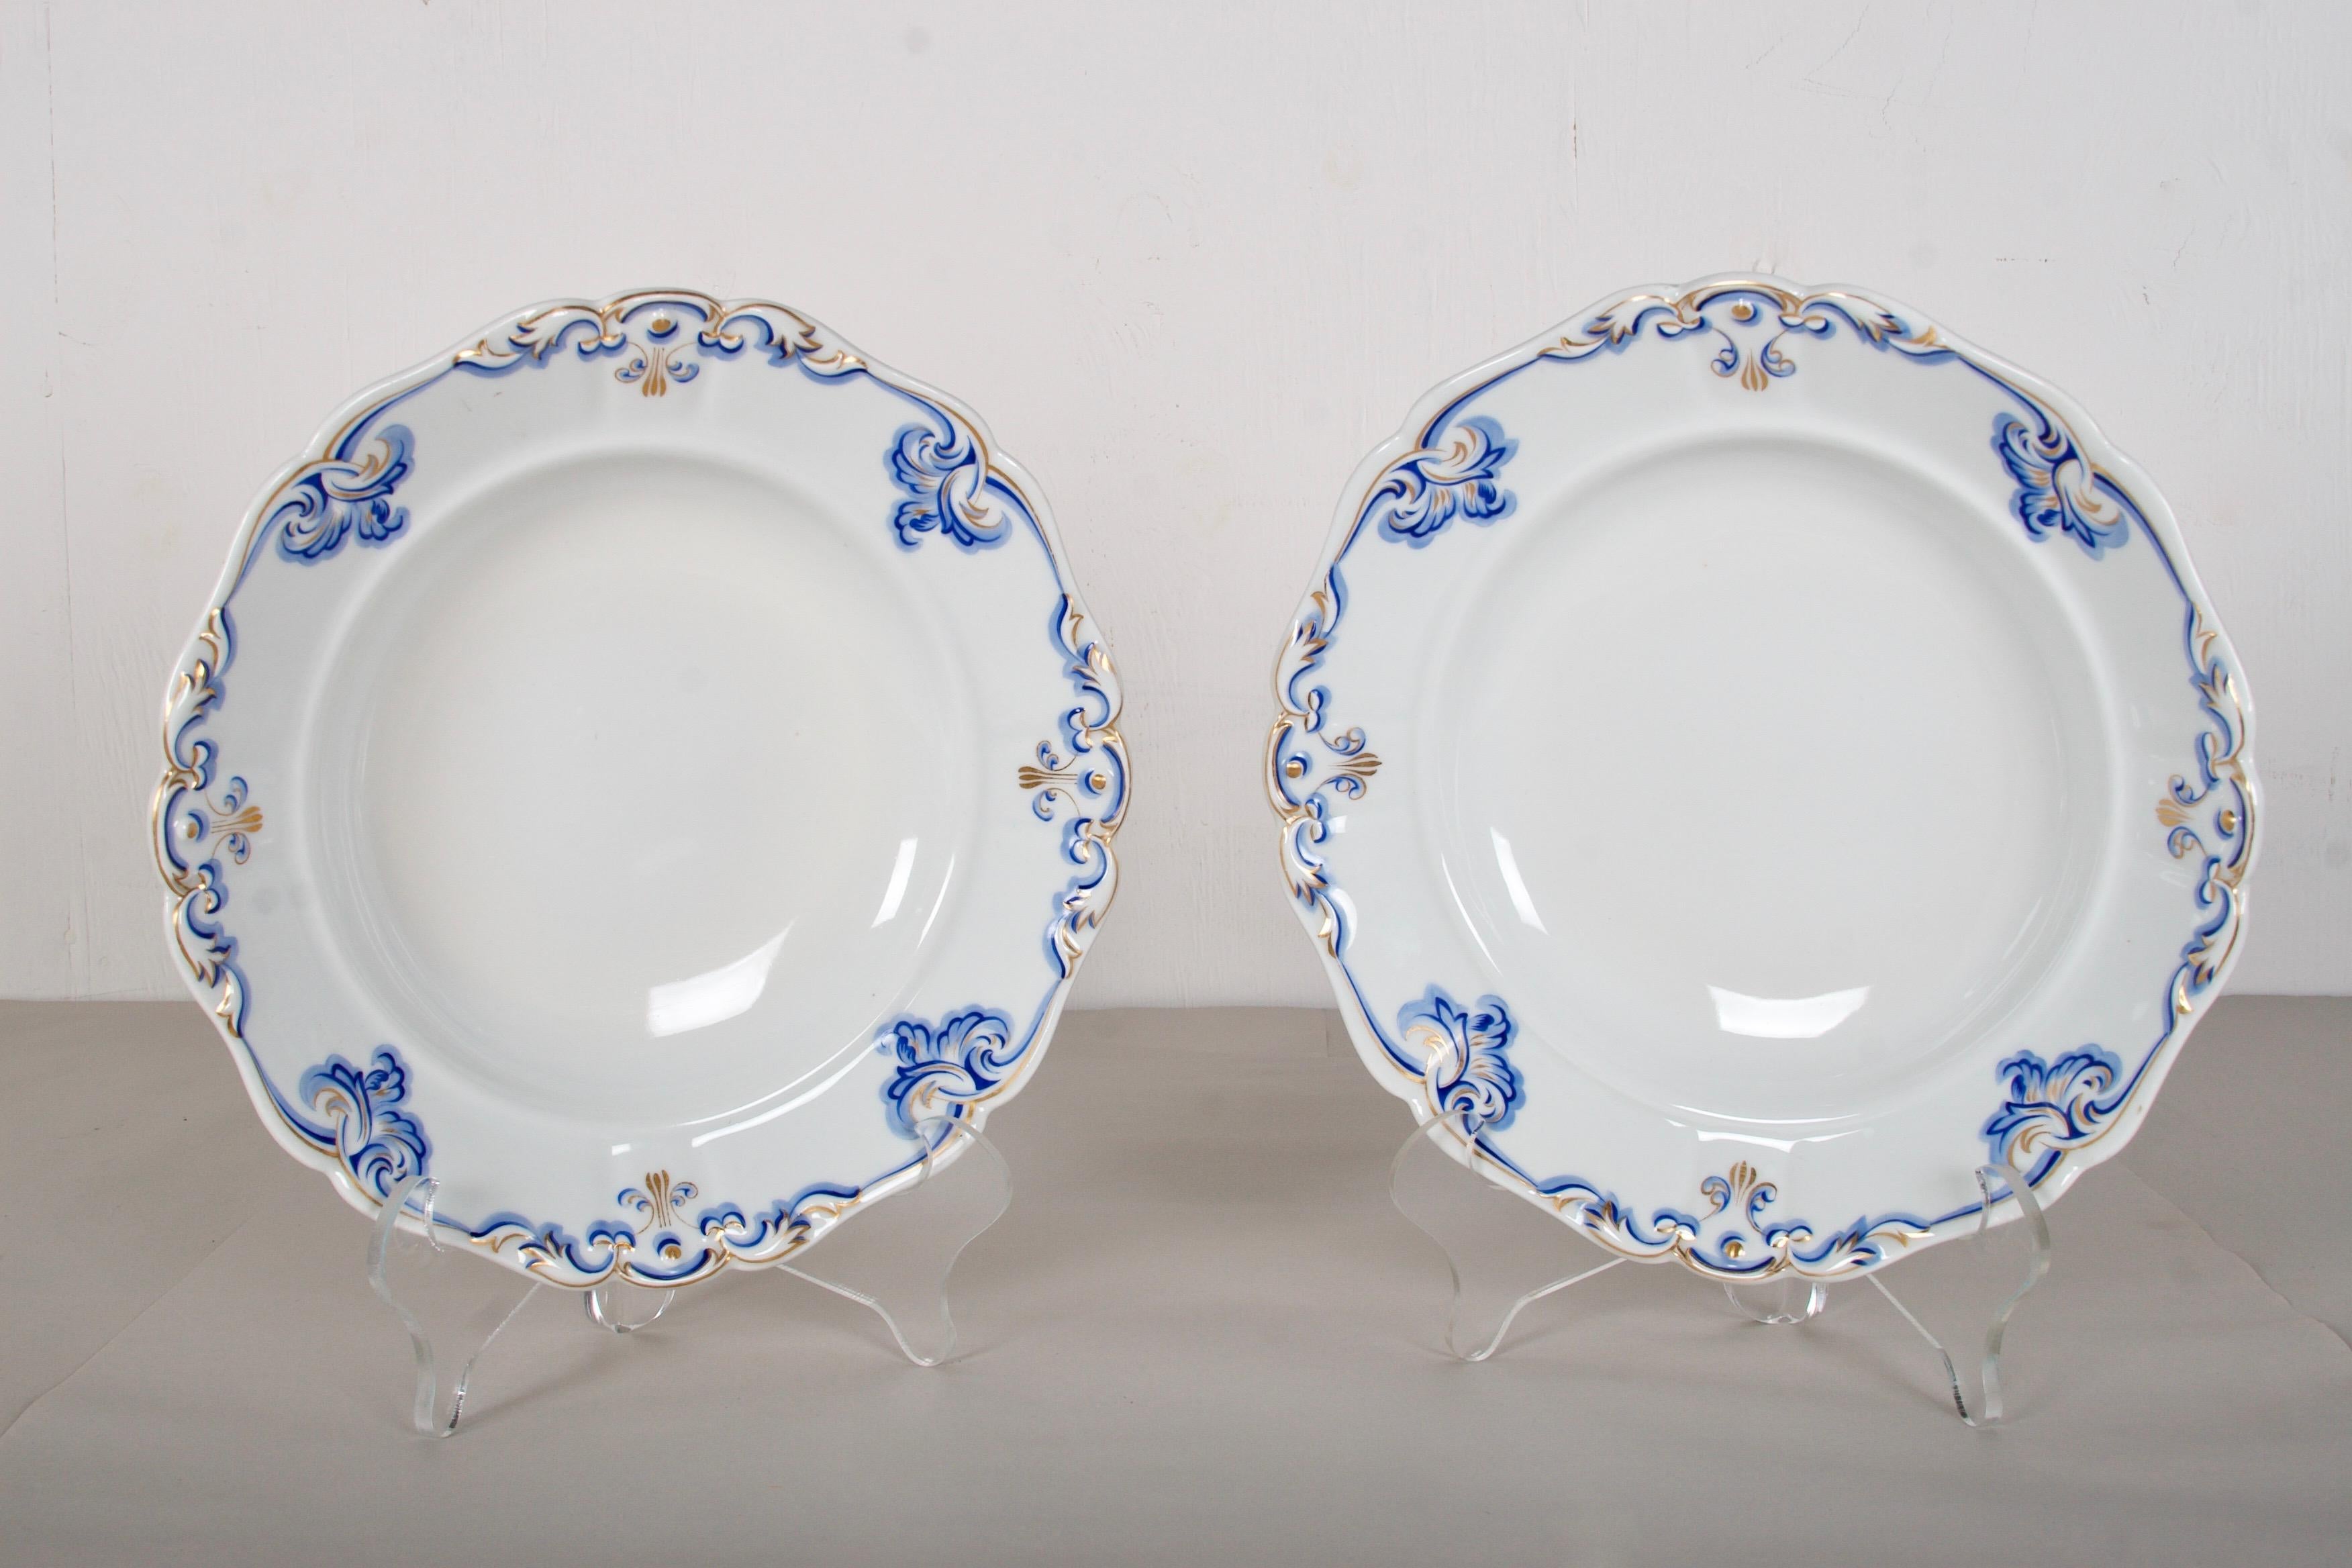 1851 Imperial Vienna Porcelain 27 piece Service for 18, very rare en vente 3